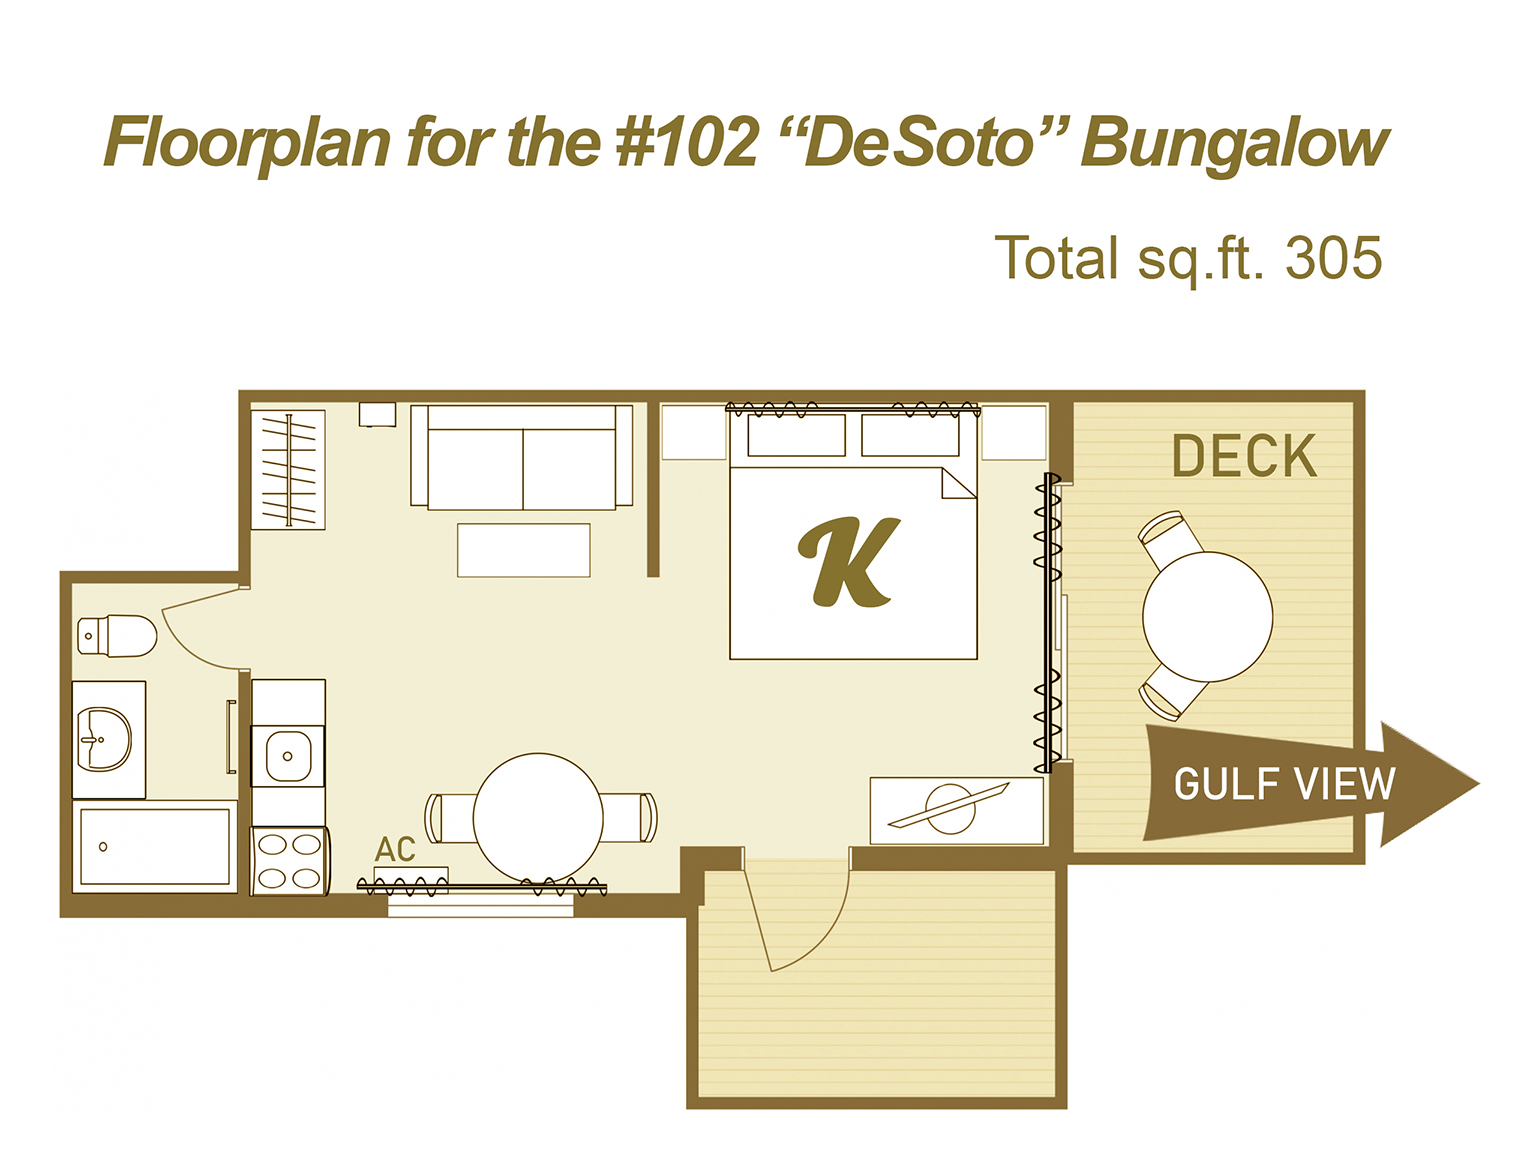 Floor plan for DeSoto Bungalow #102 Bungalow